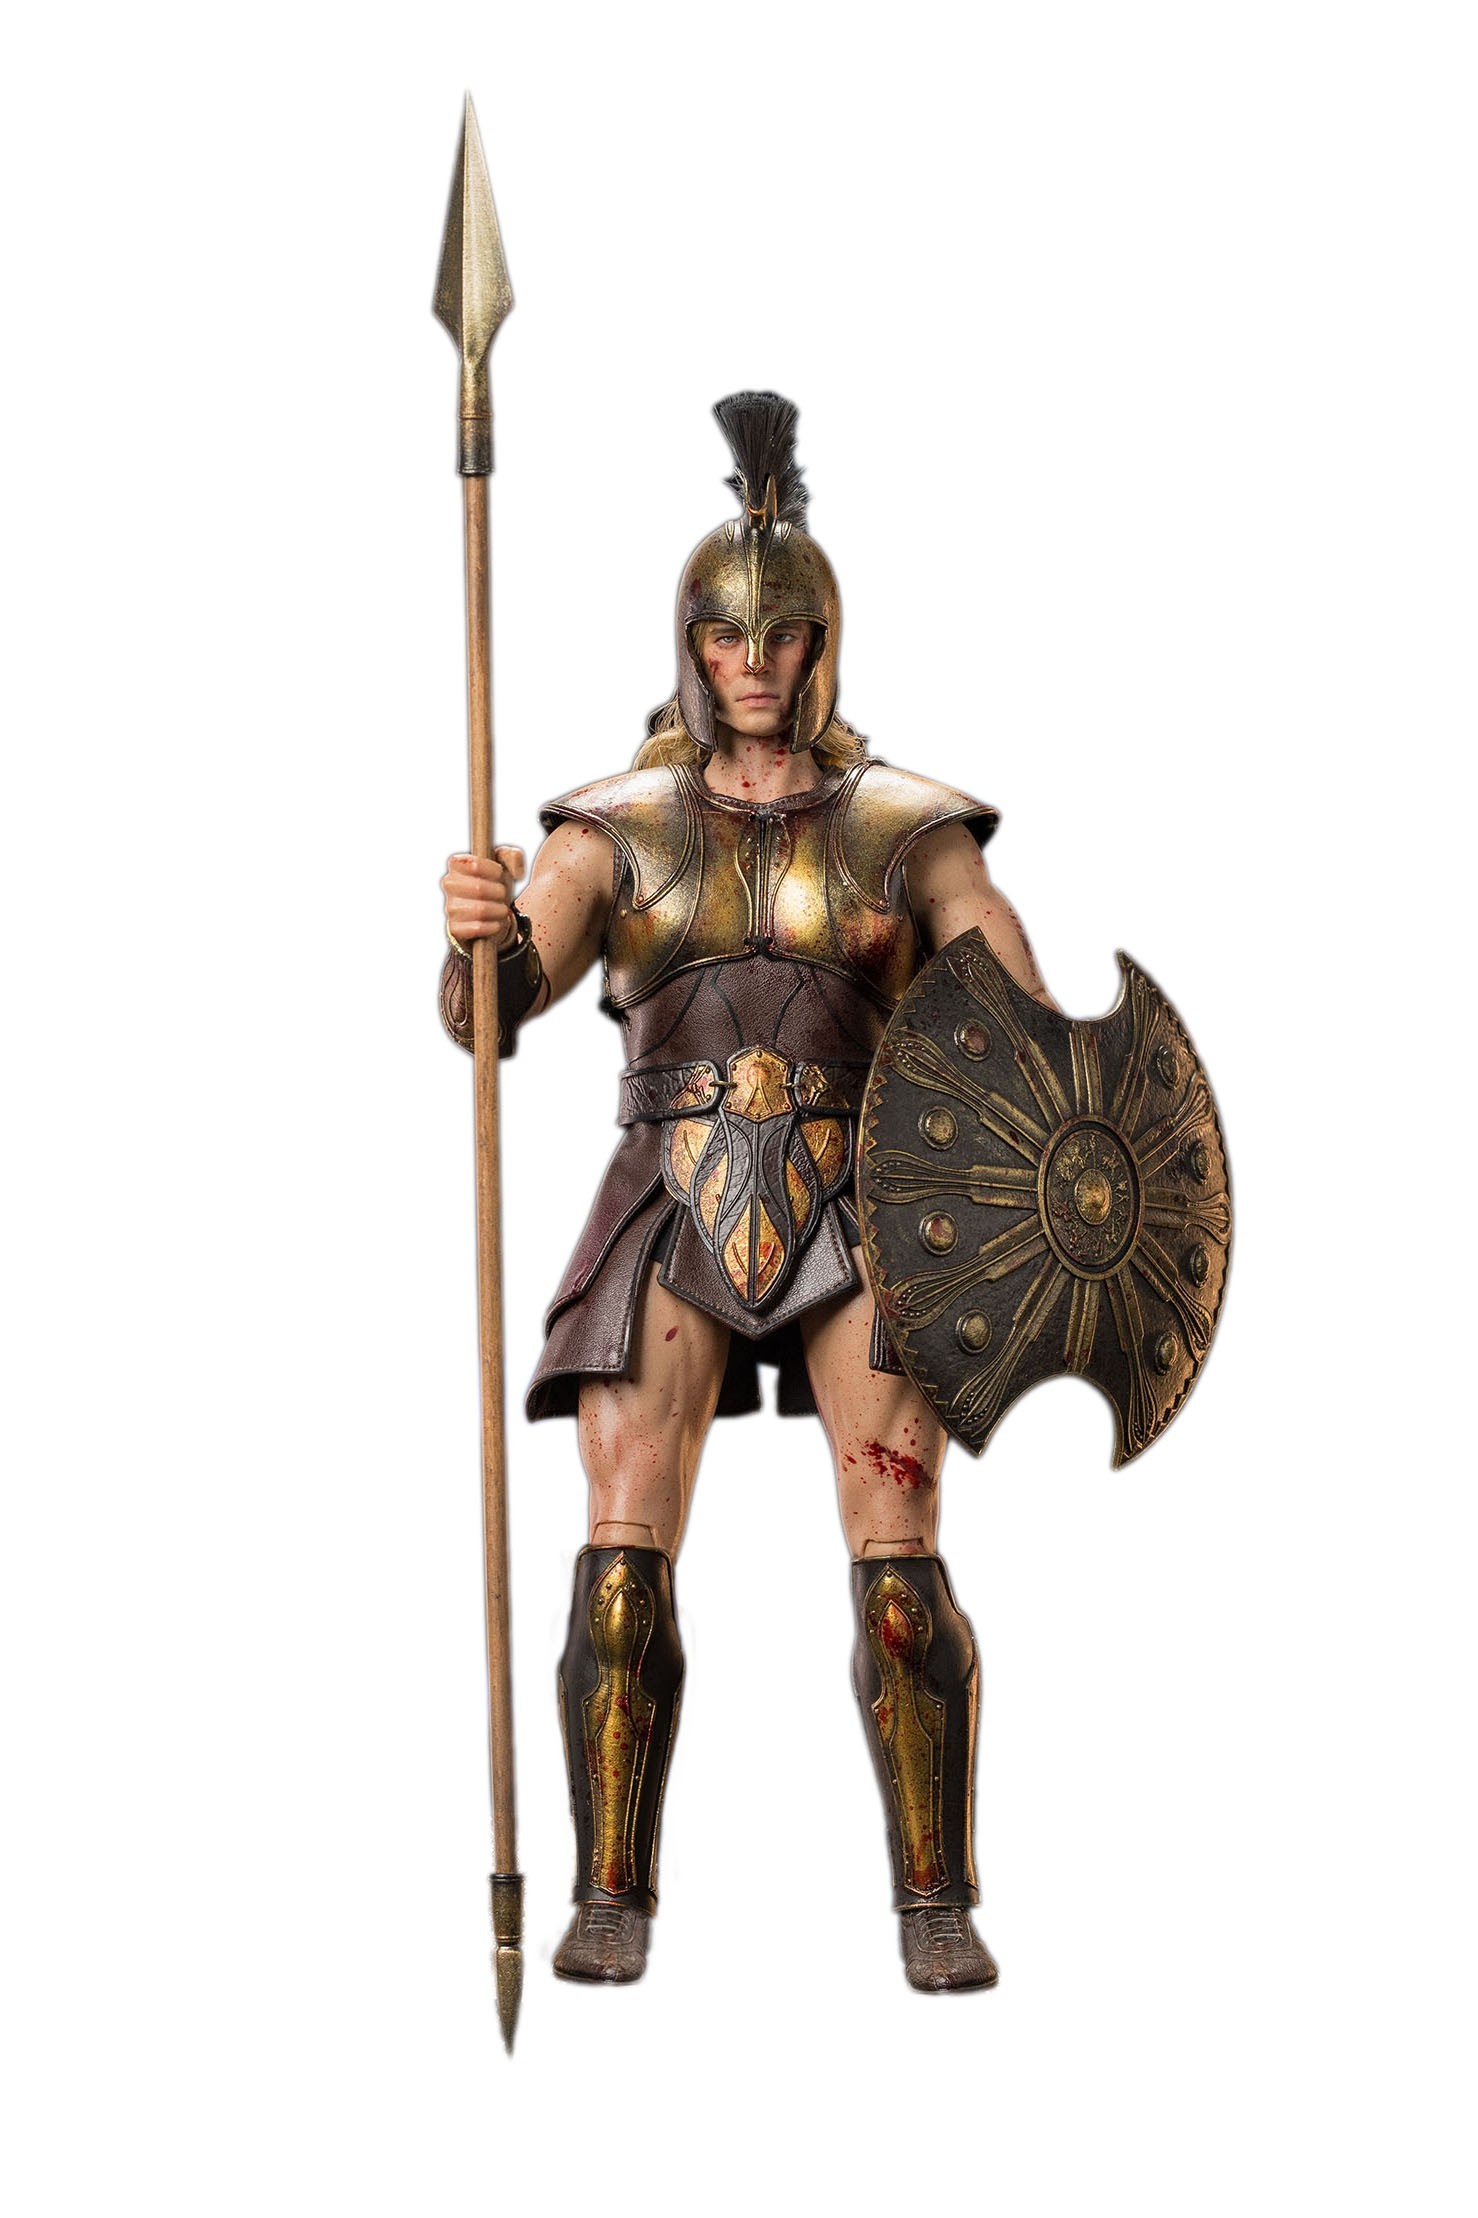 1/6 Scale HaoYuTOYS HHmodel Empire Legion Trojan Horse Massacre Greek First Warrior Bloody Battle Ver HH18048